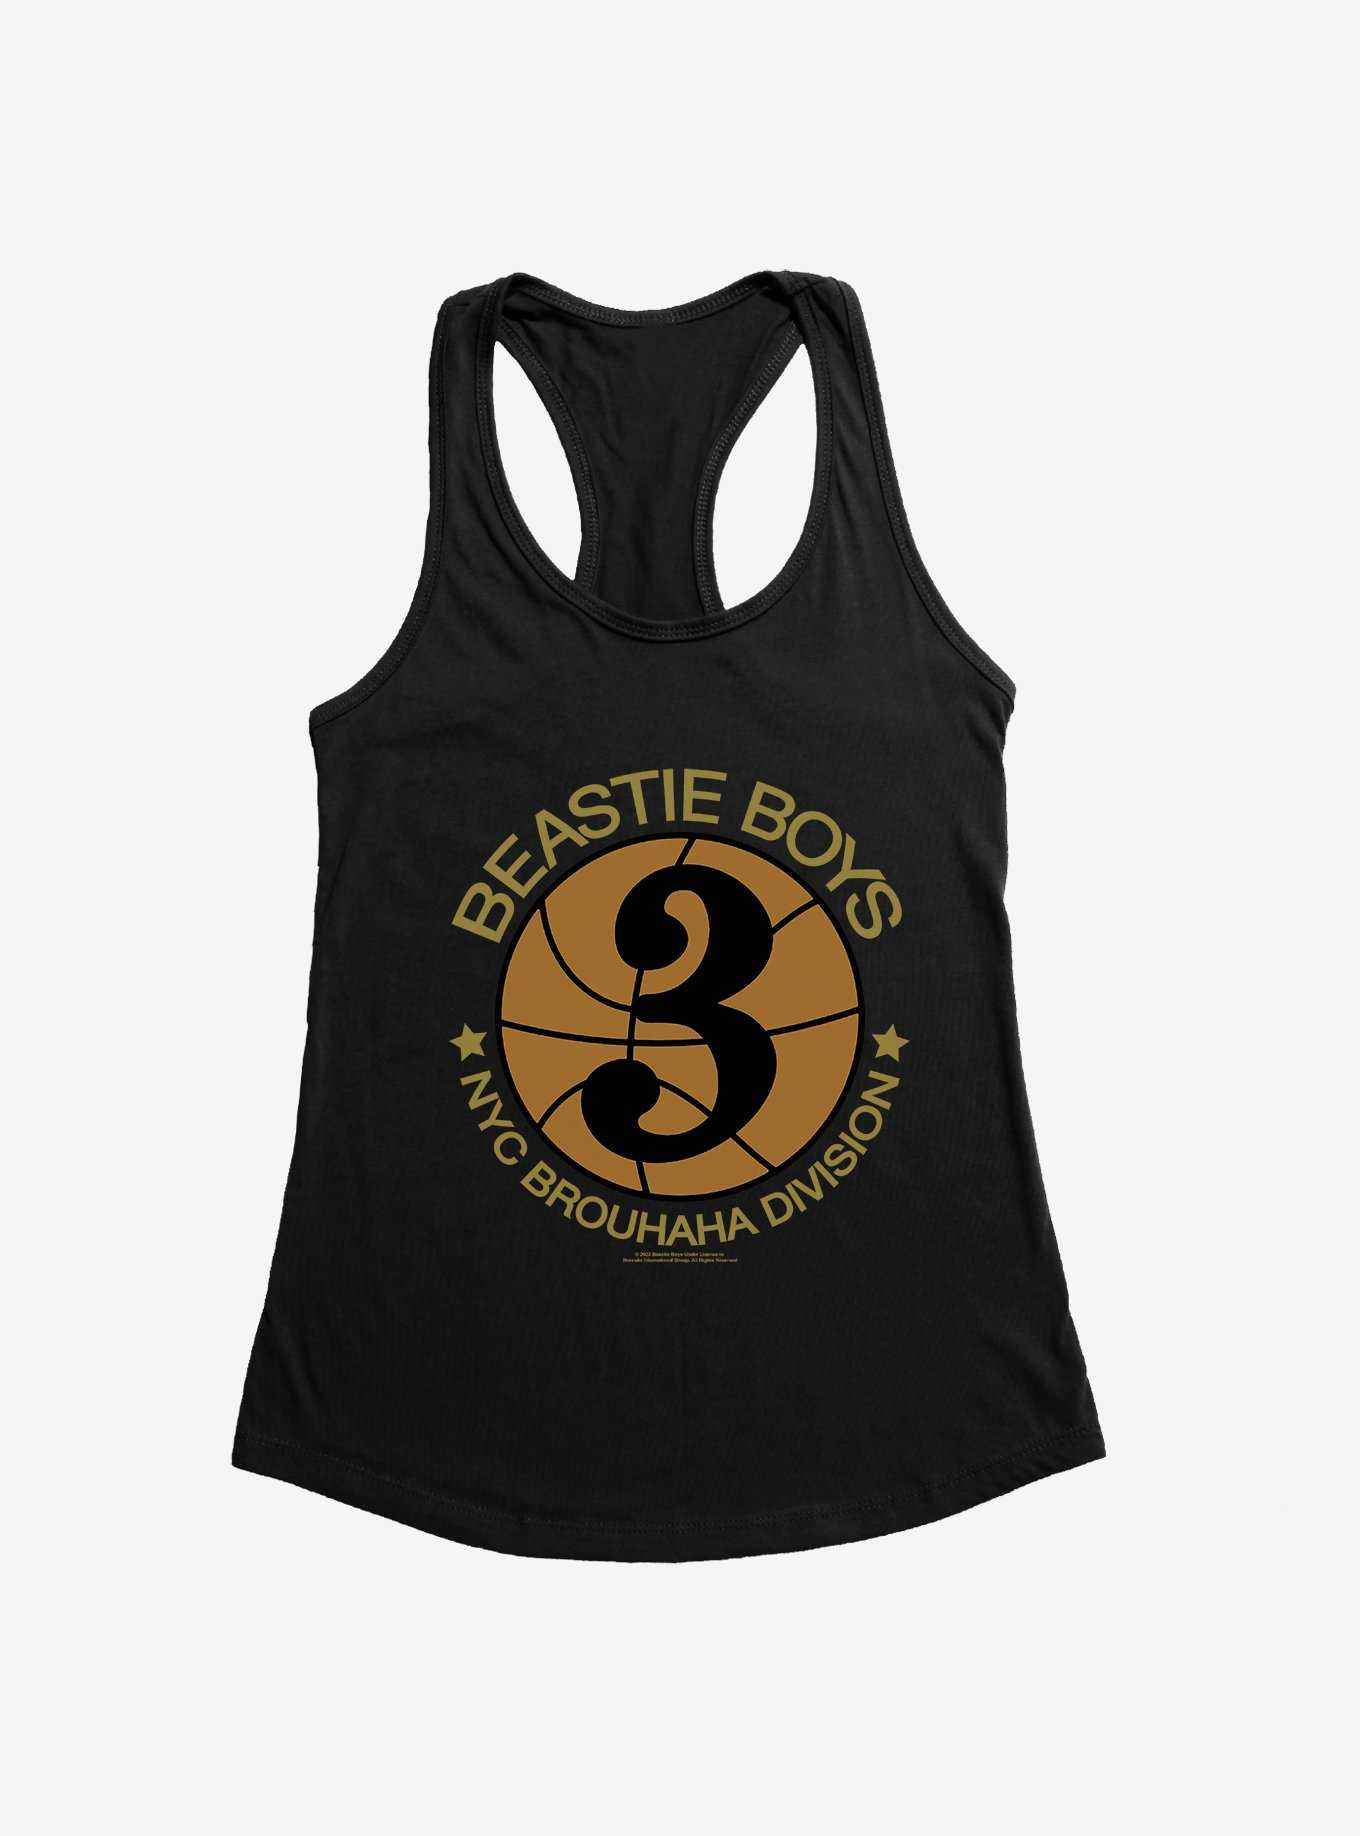 Beastie Boys NYC Brouhaha Division Girls Tank, , hi-res